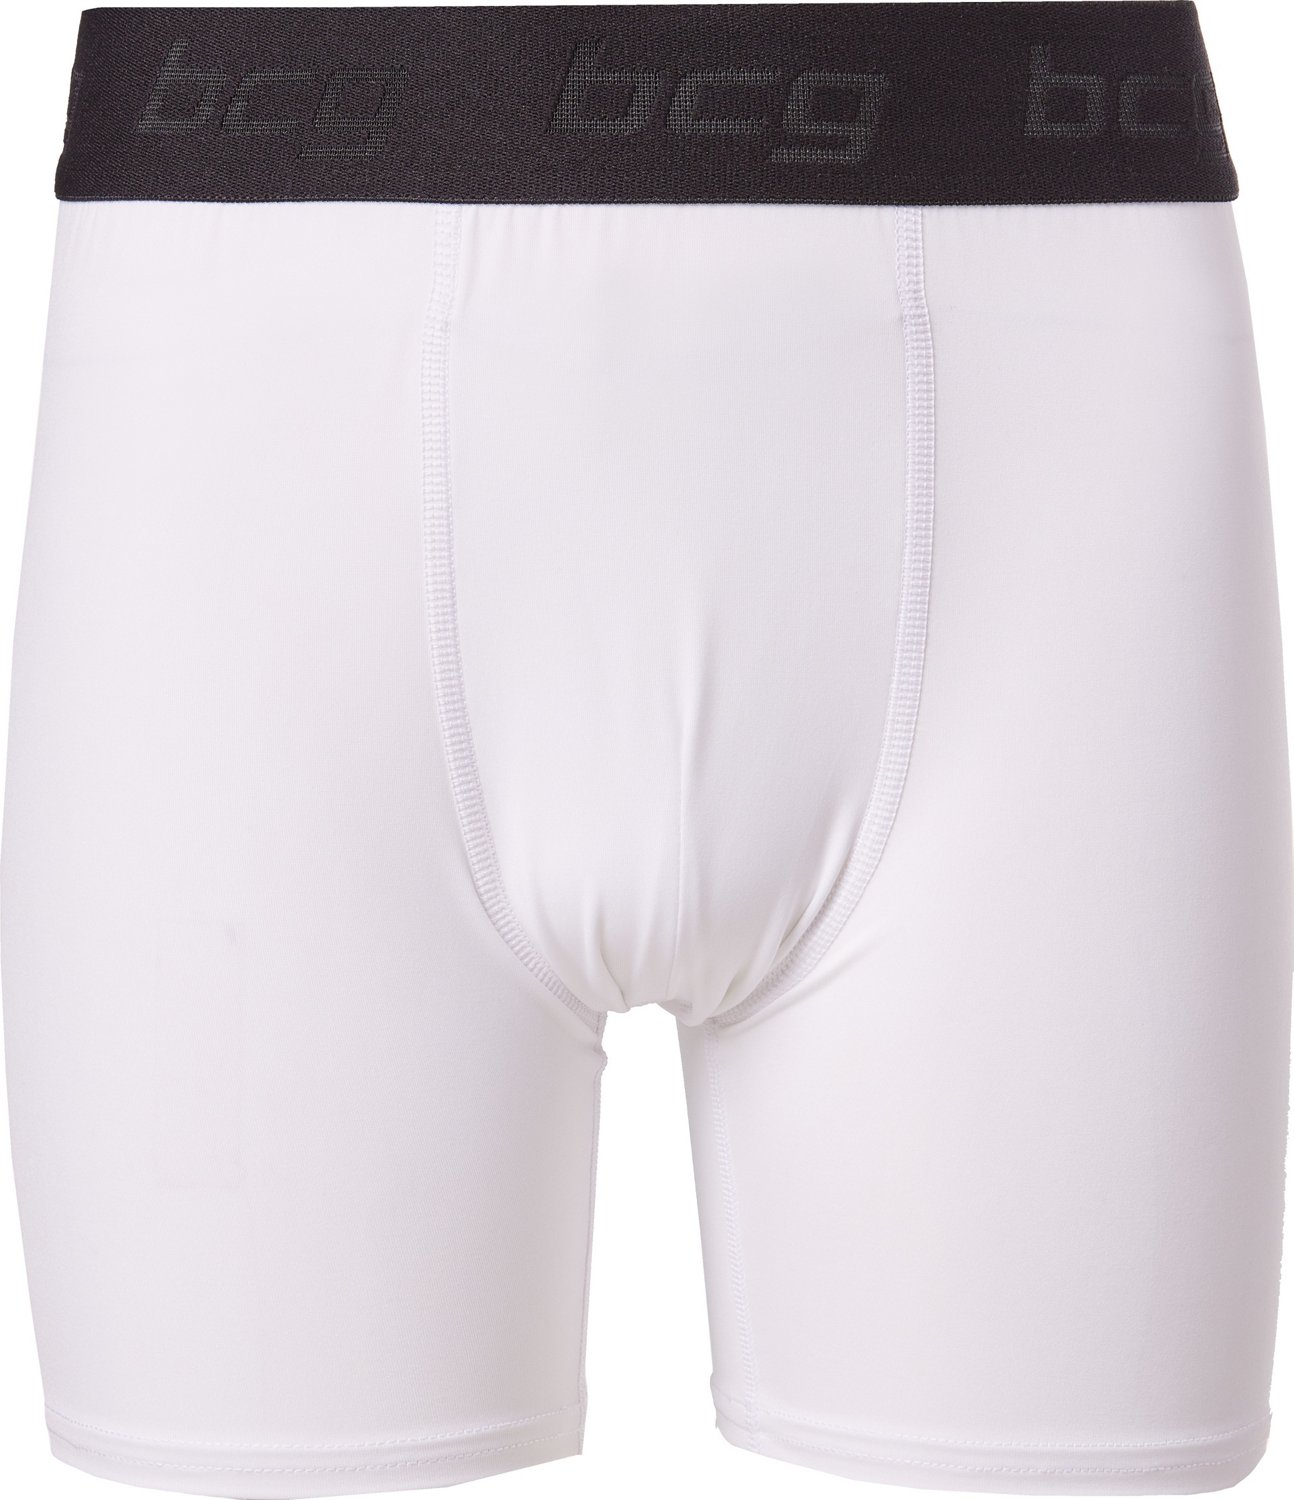 BCG Boys' Solid Compression Shorts